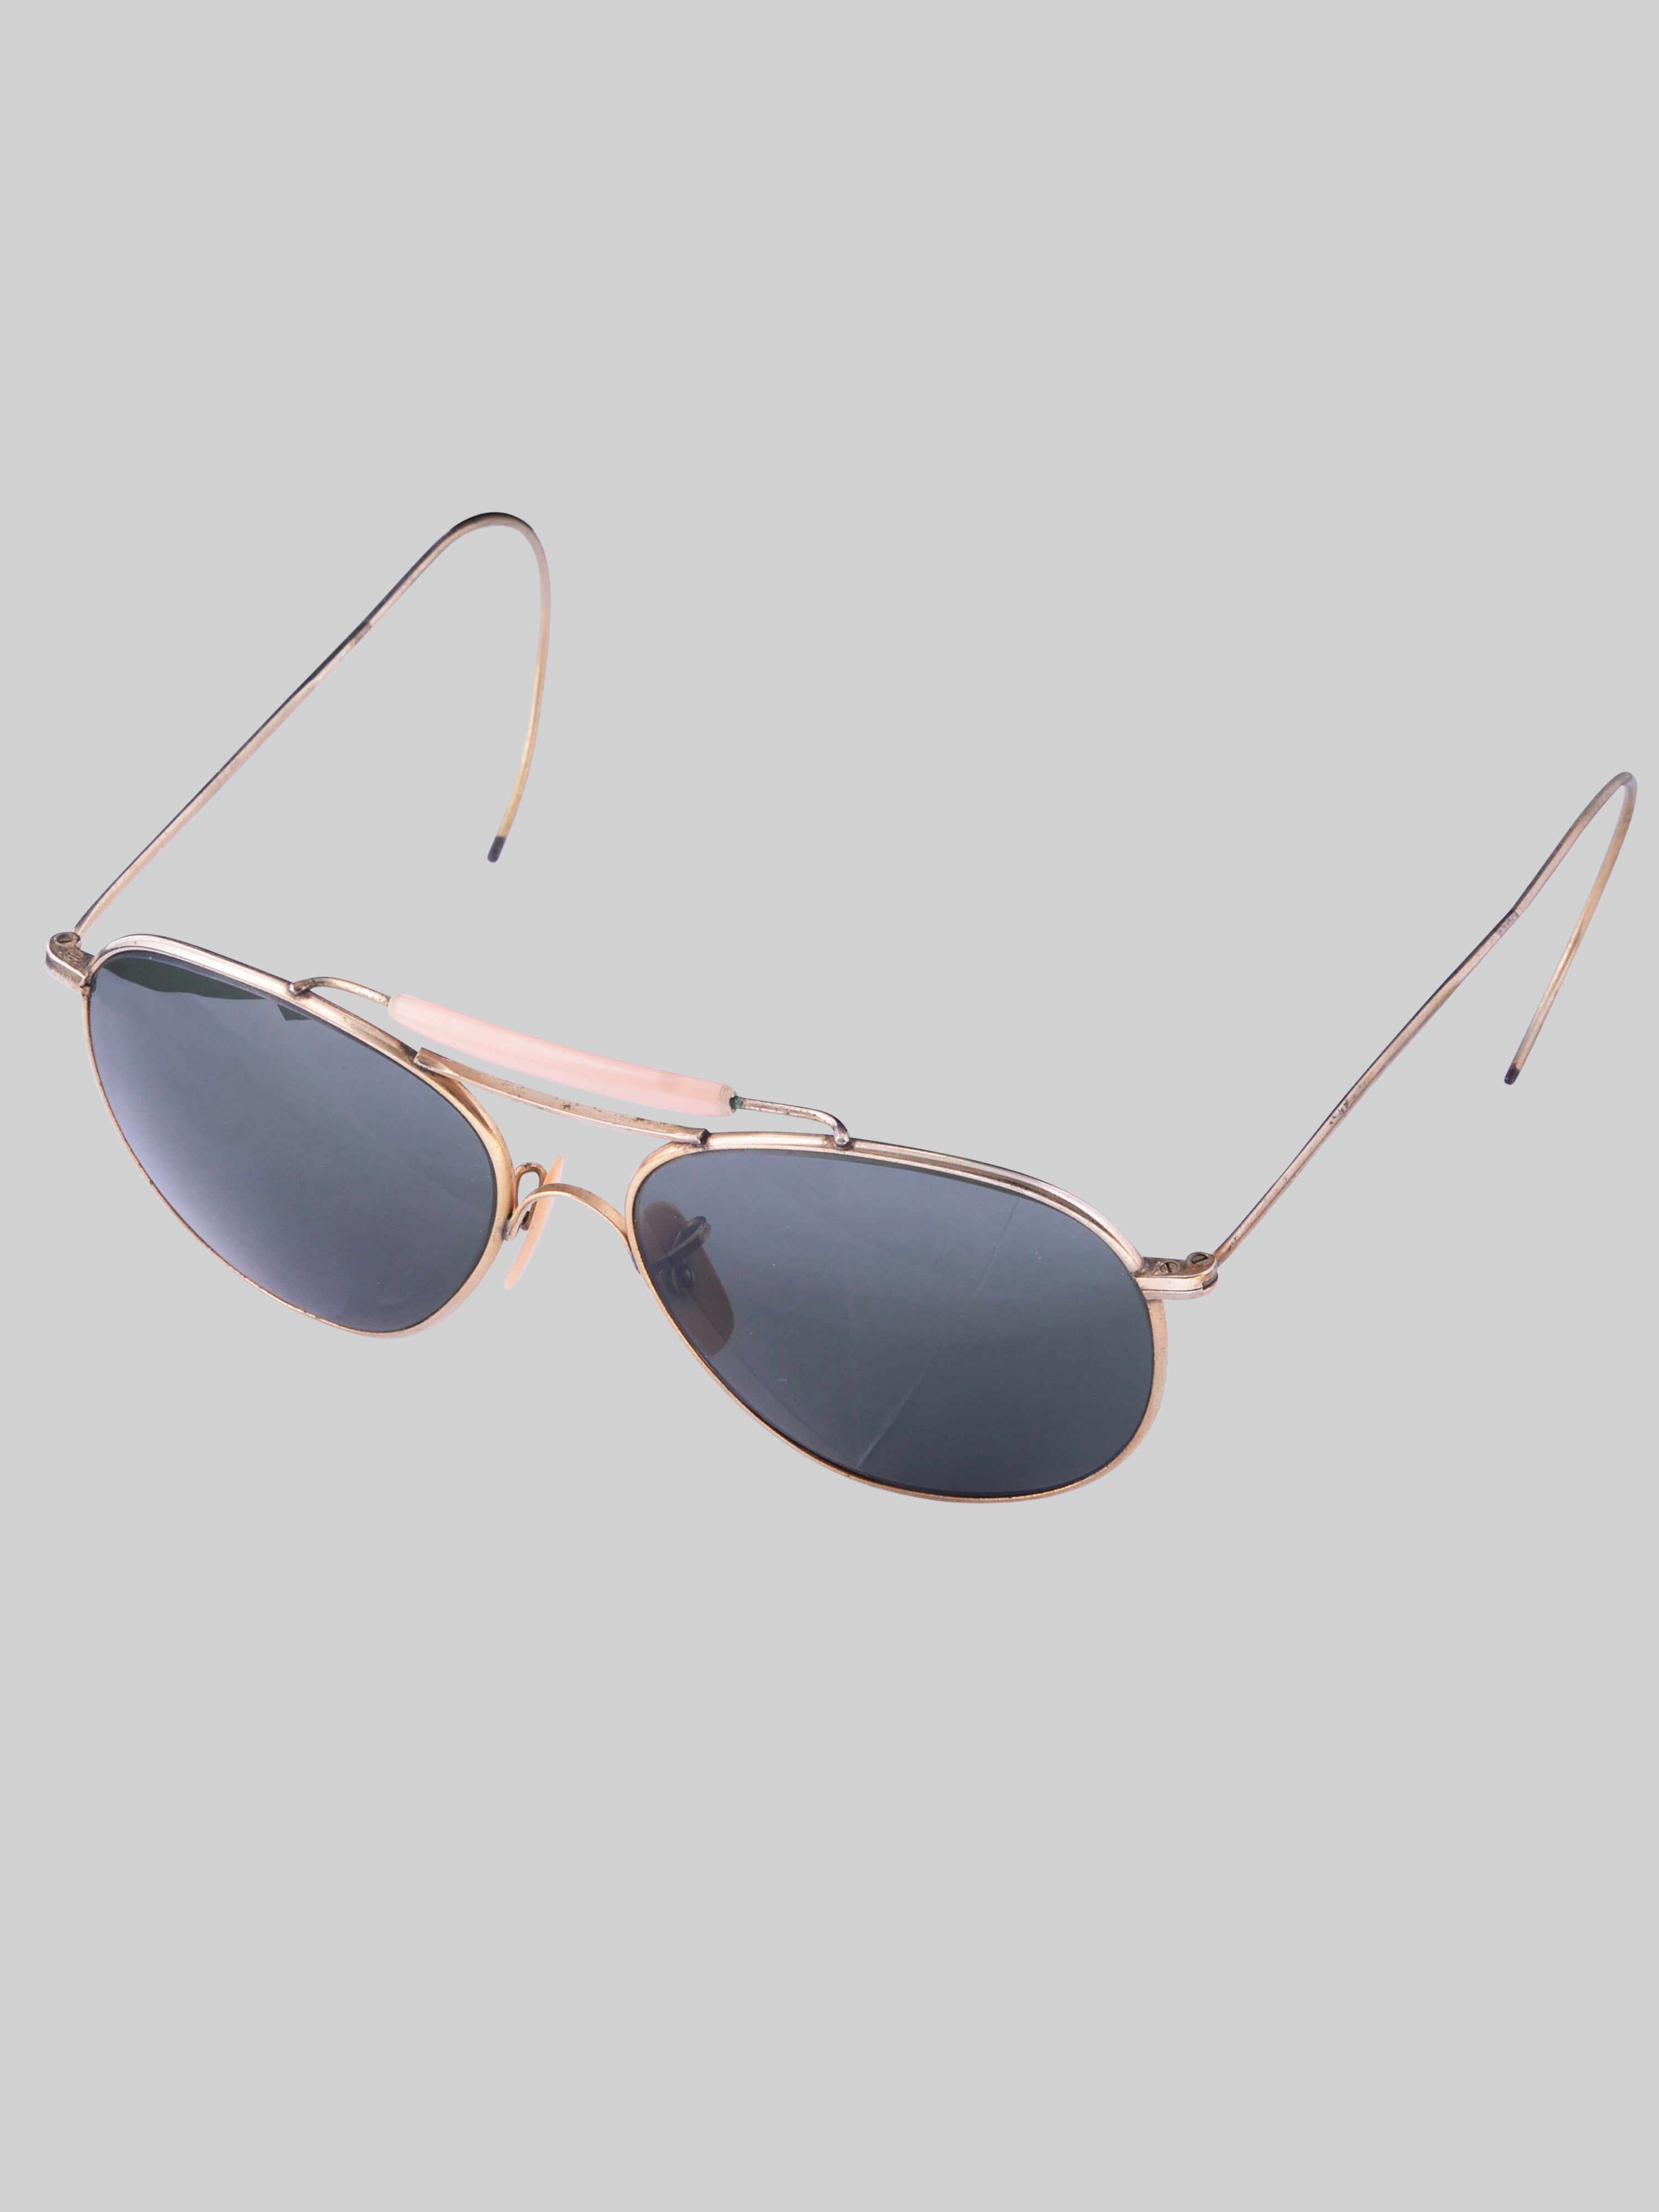 1940's American Optical Aviator Sunglasses